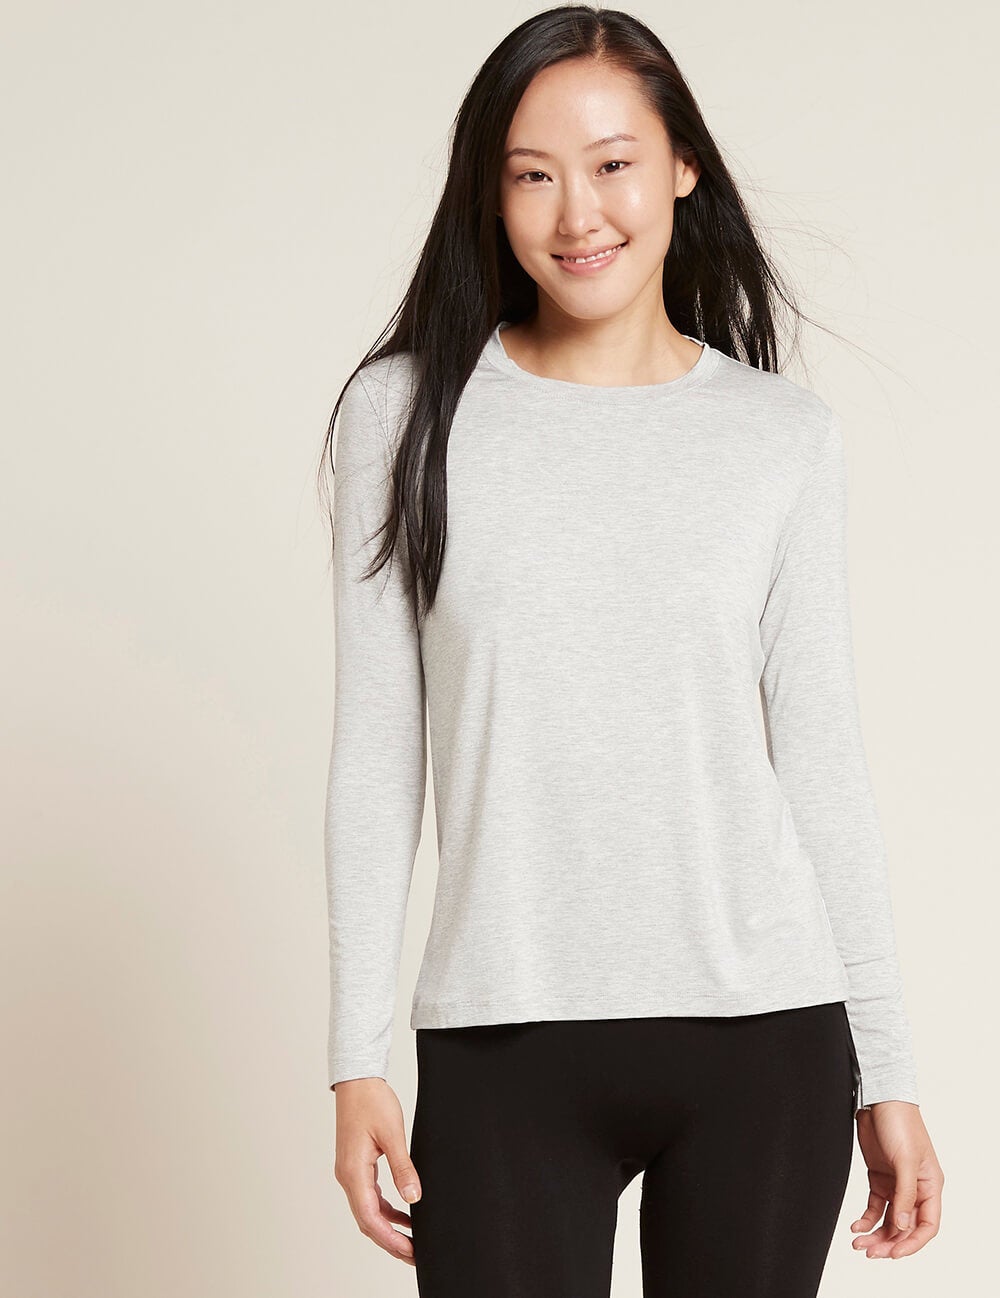 Boody Women's Long Sleeve Round Neck T-Shirt Light Grey Marl